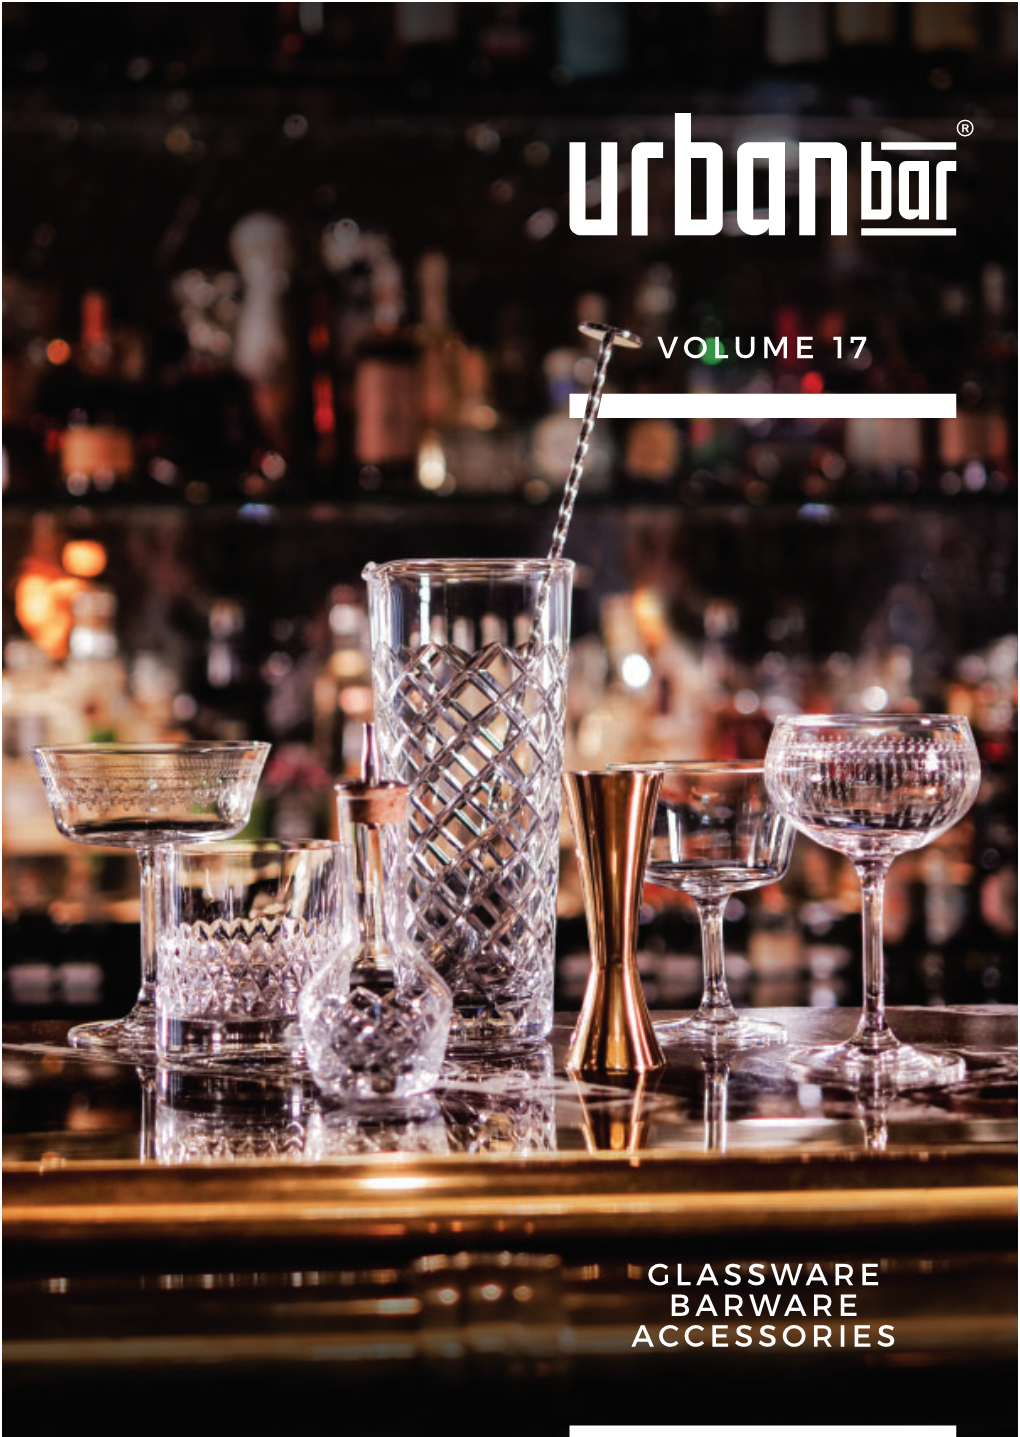 Glassware Barware Accessories Volume 17